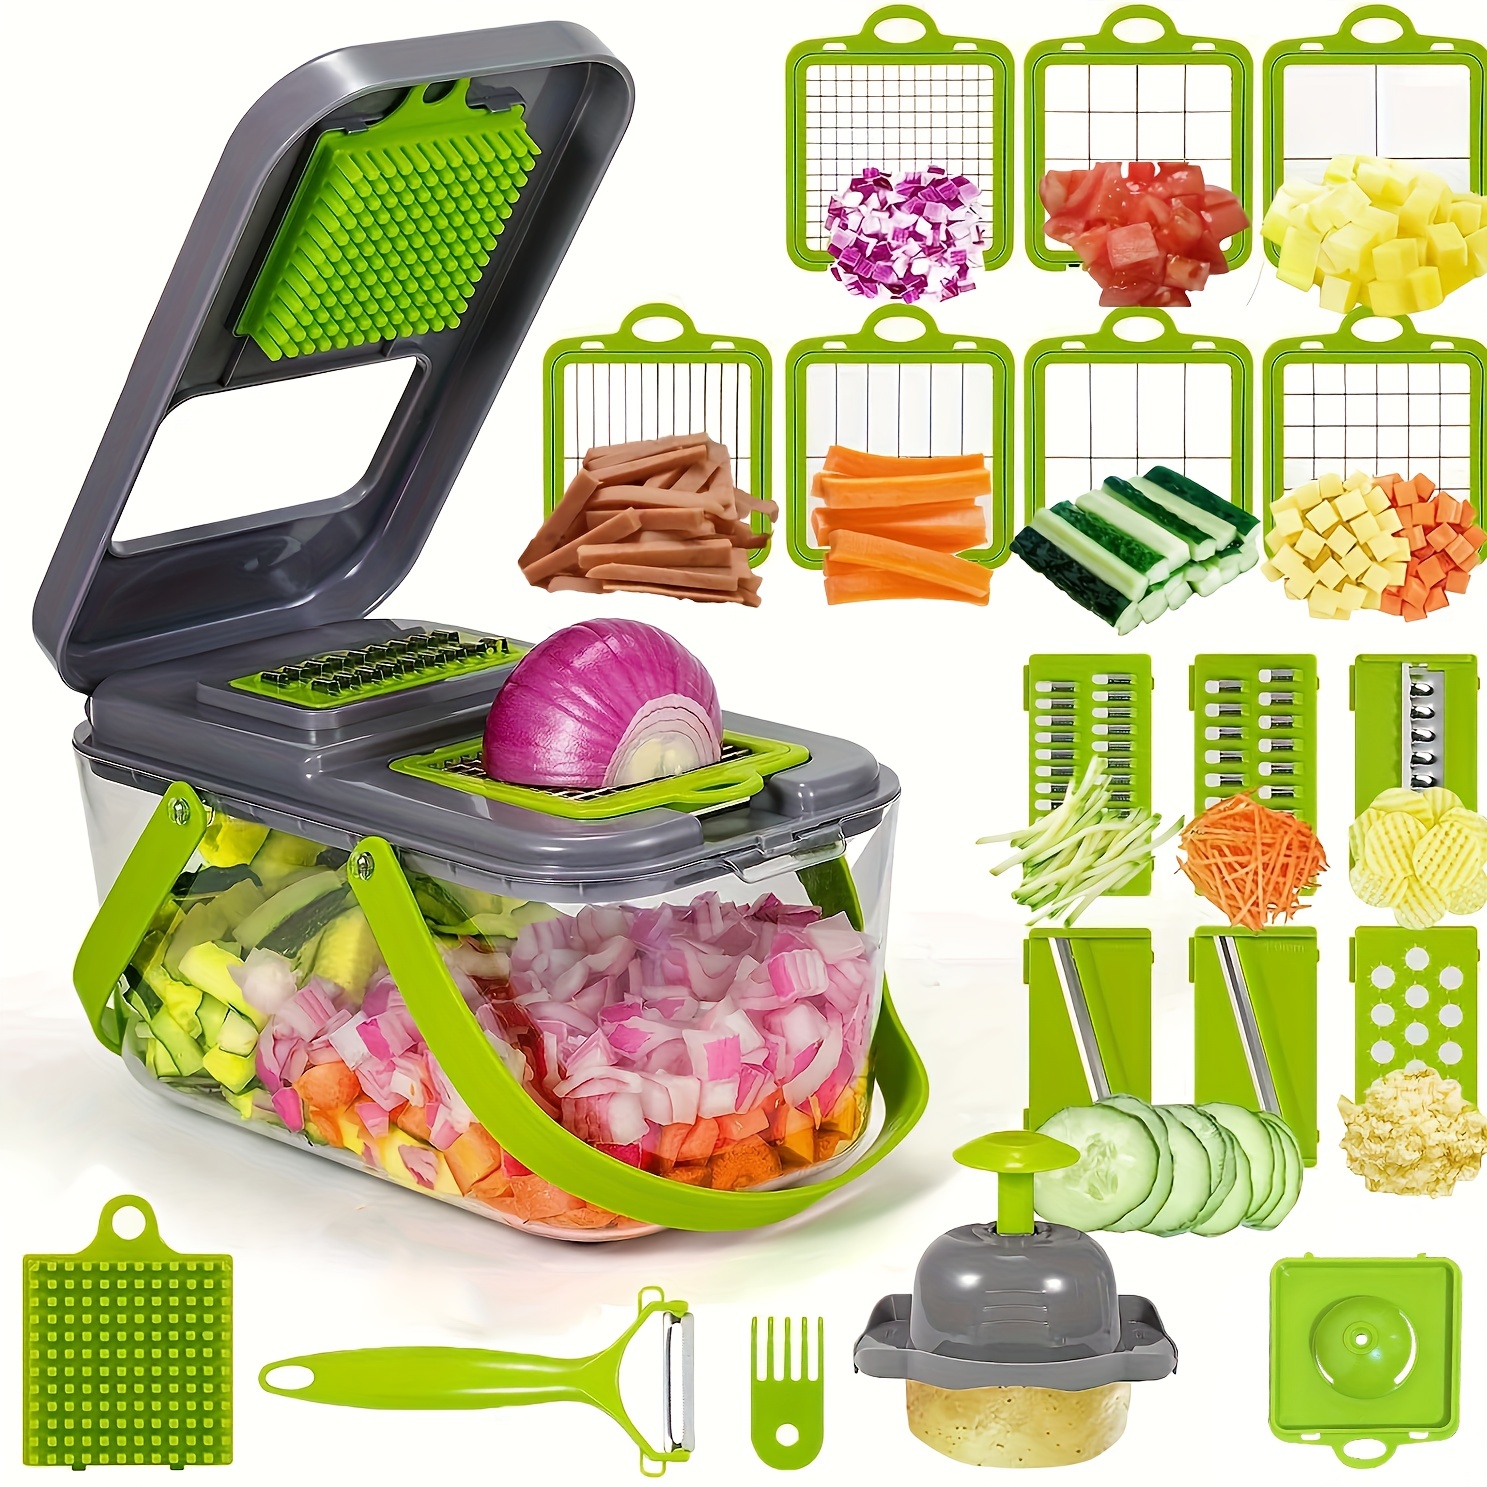 Vegetable Chopper, Multifunctional Fruit Slicer, Manual Food